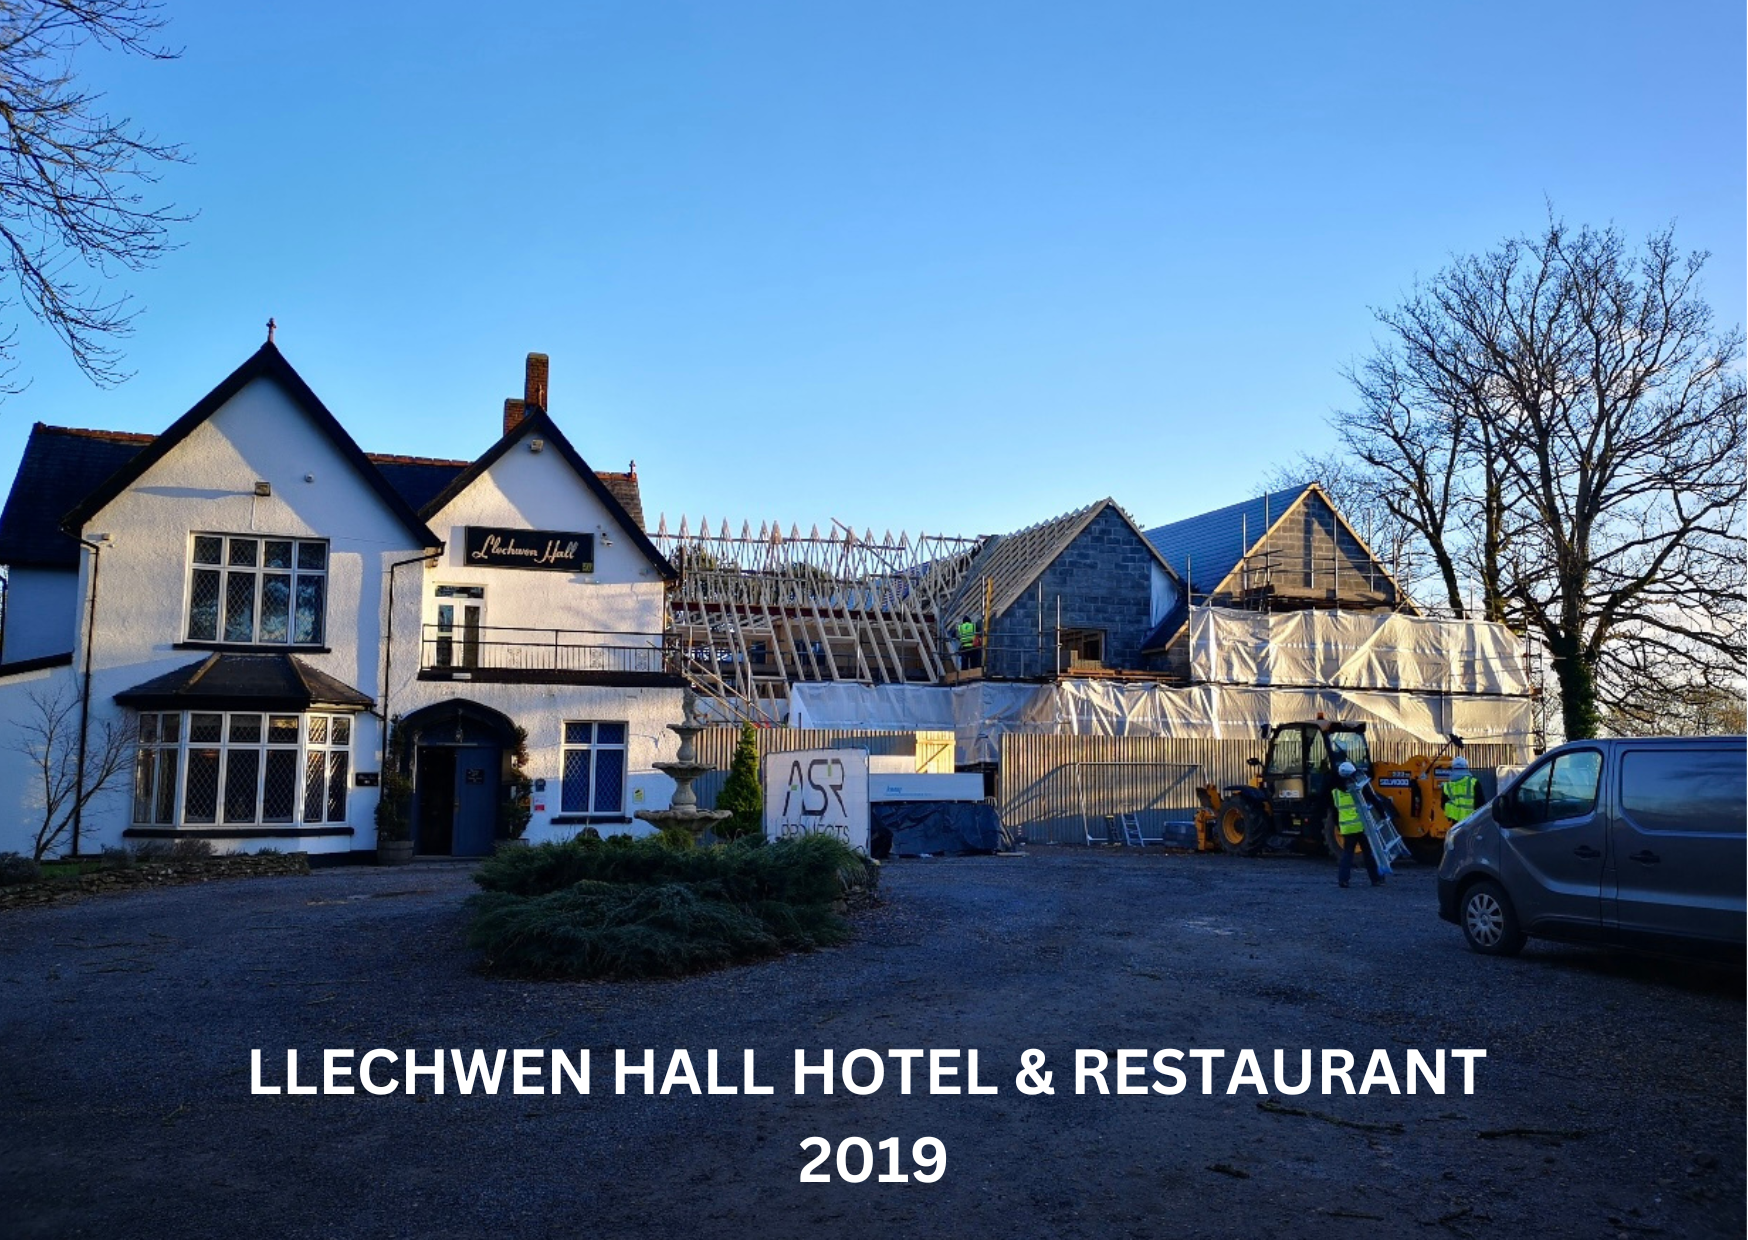 Llechwen Hall Hotel & Restaurant